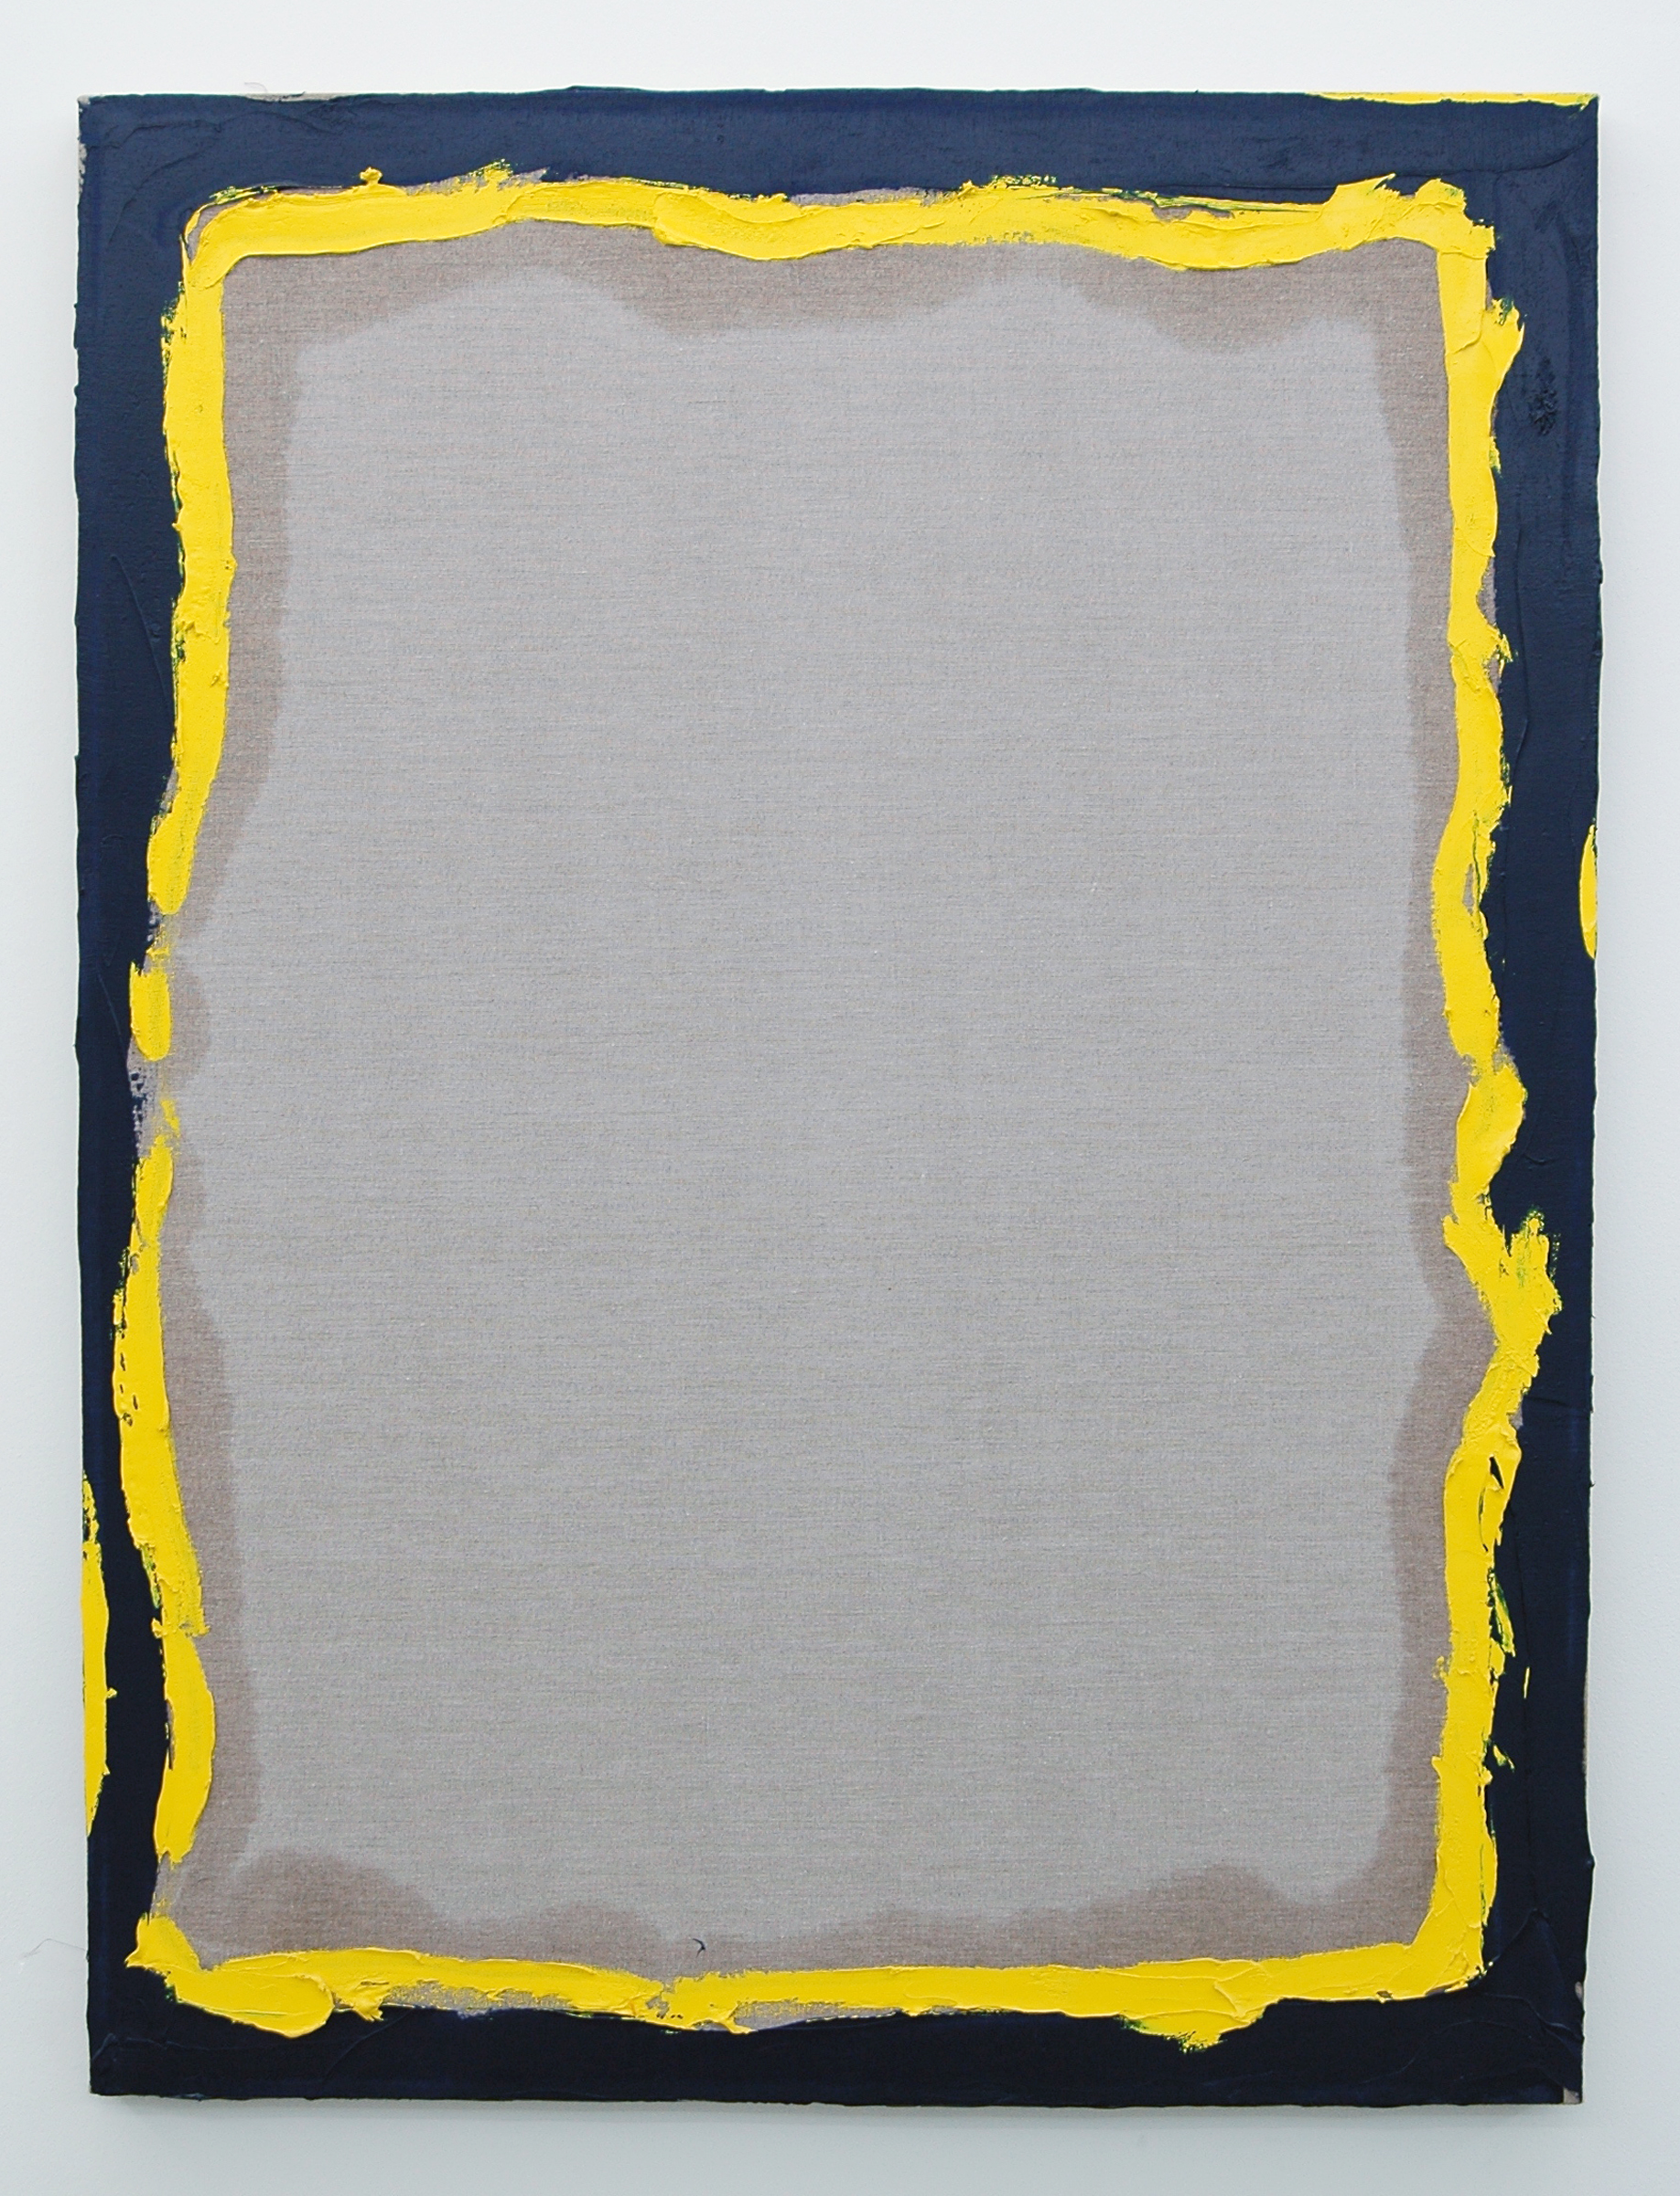   /SLASH/  Peter Kirkeby,&nbsp; Untitled,&nbsp; oil and rabbit skin glue on linen, 40" x 30", 2013 